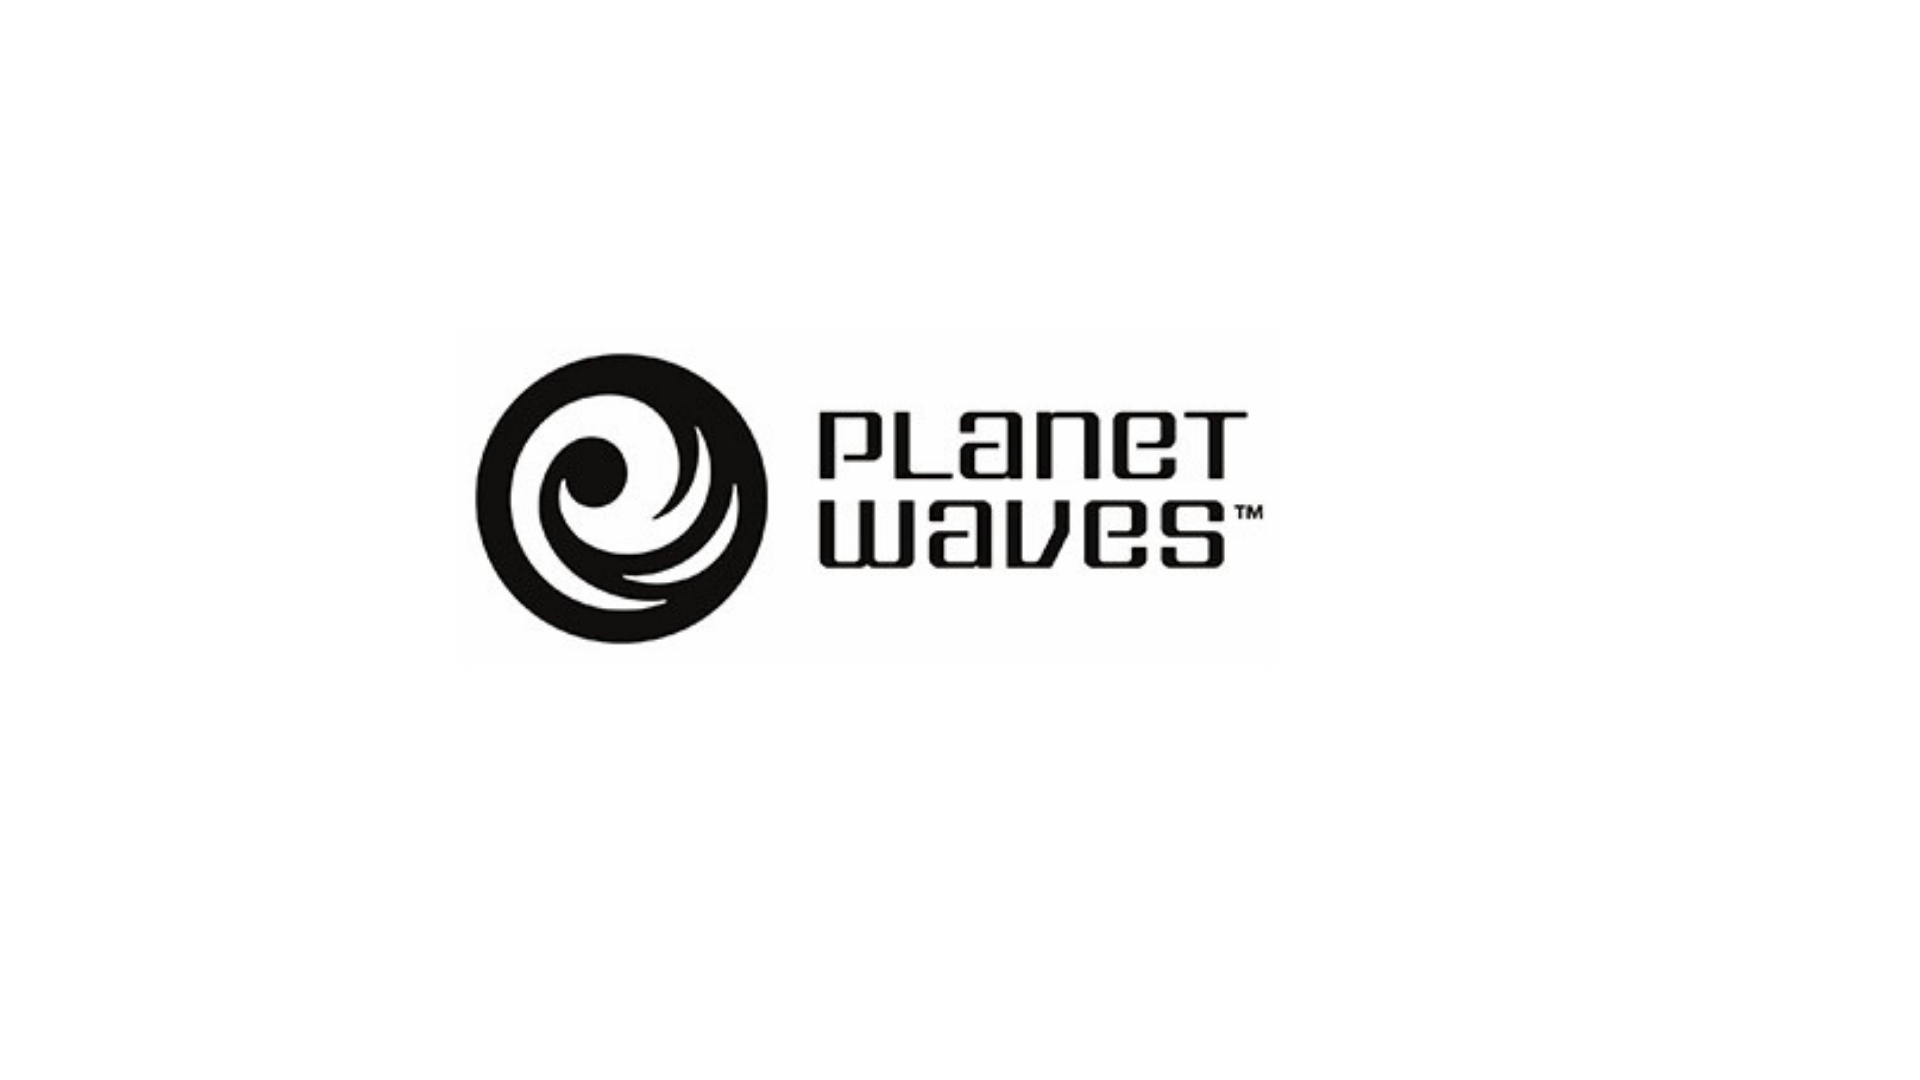 planet waves logo done.jpg